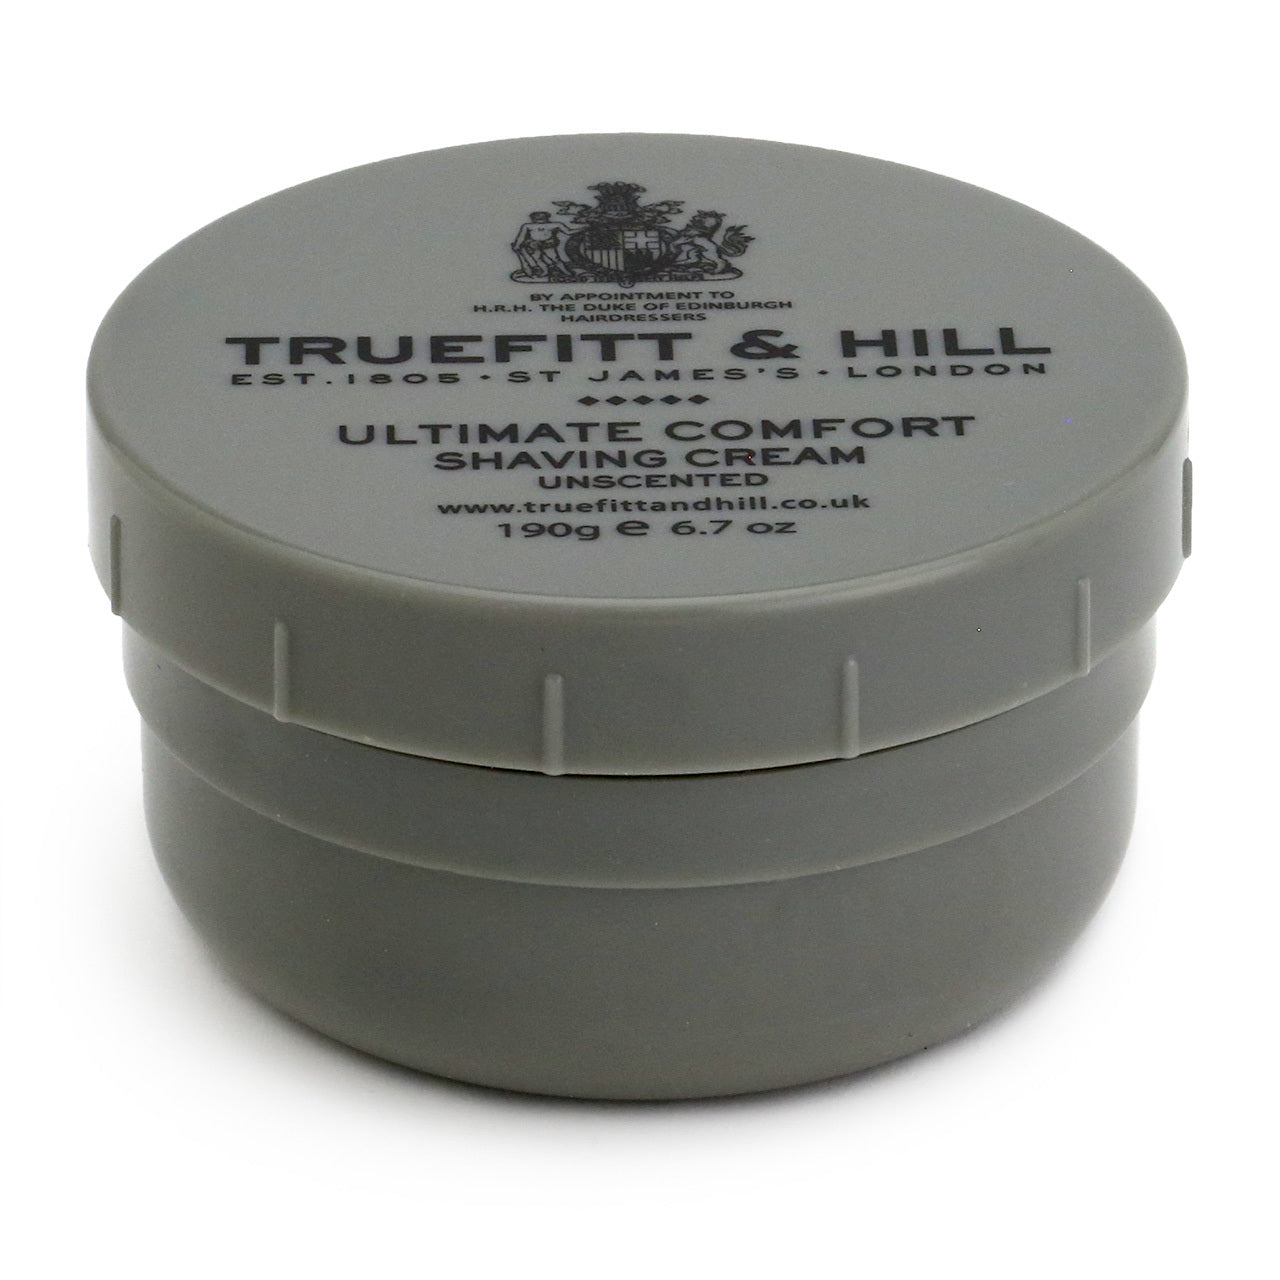 Truefitt & Hill Ultimate Comfort Unscented Shave Cream Bowl 190g